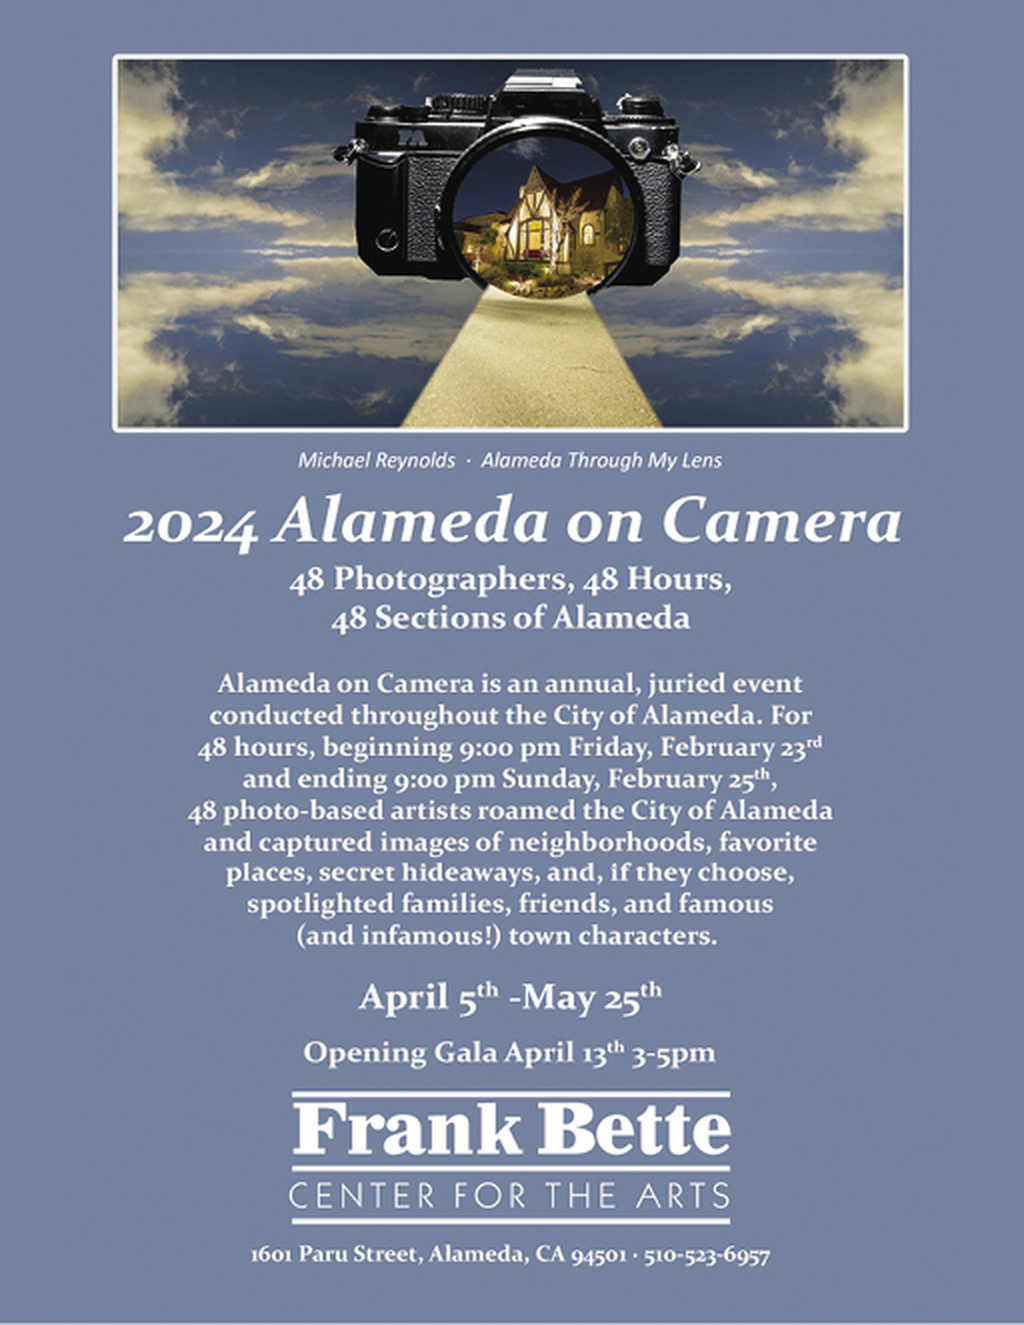 Frank Bette Center For the Arts Alameda Through My Lens  A 48 Hour Photography Event promotion flier on Digifli com